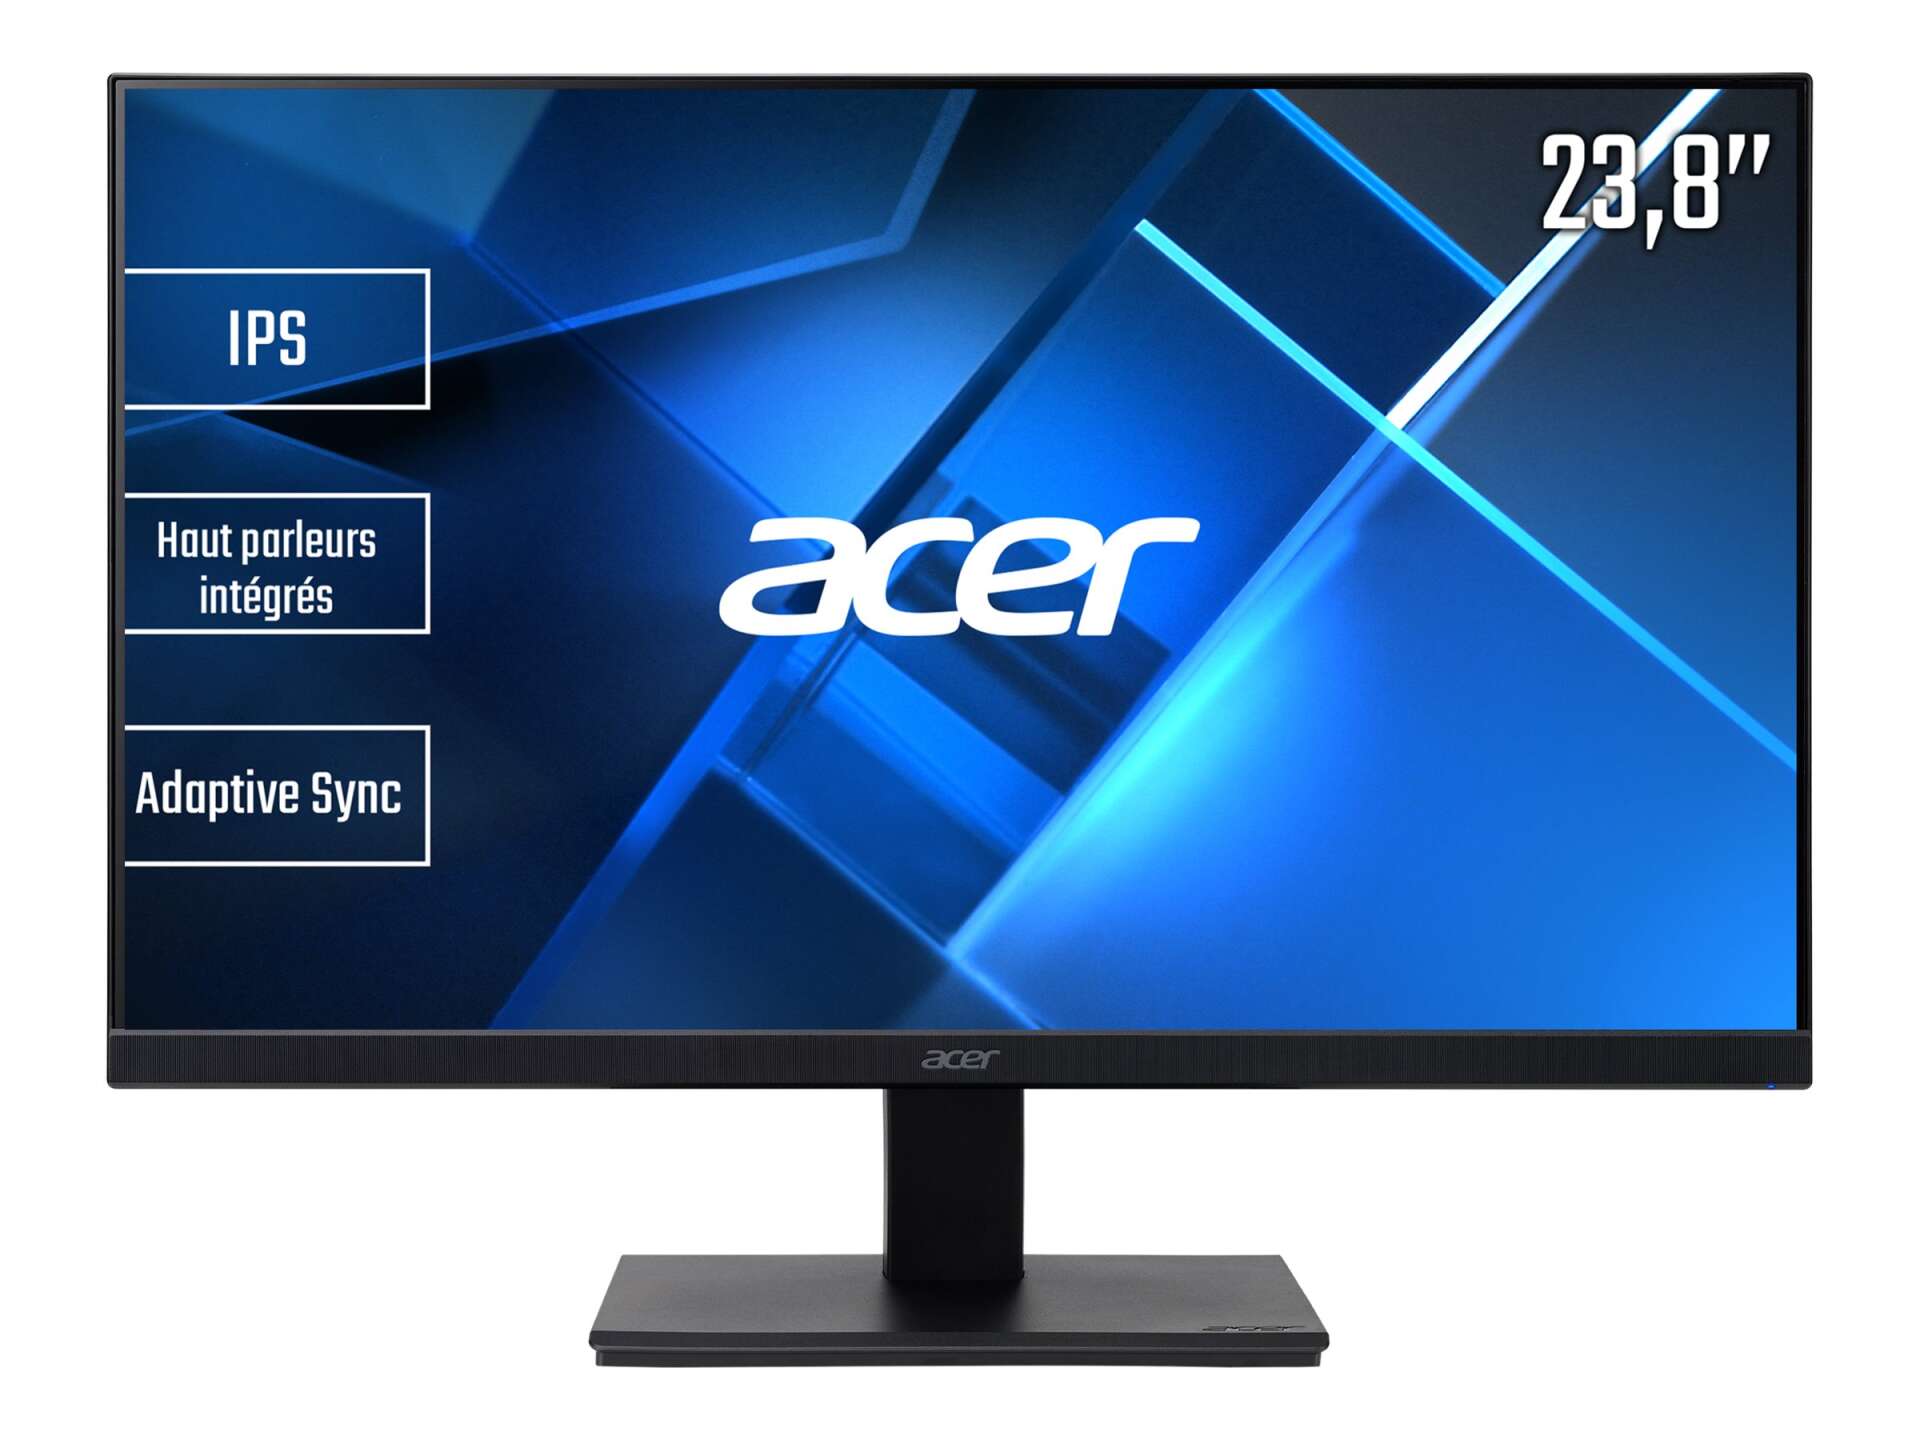 Acer 23.8" v7 v247y a monitor